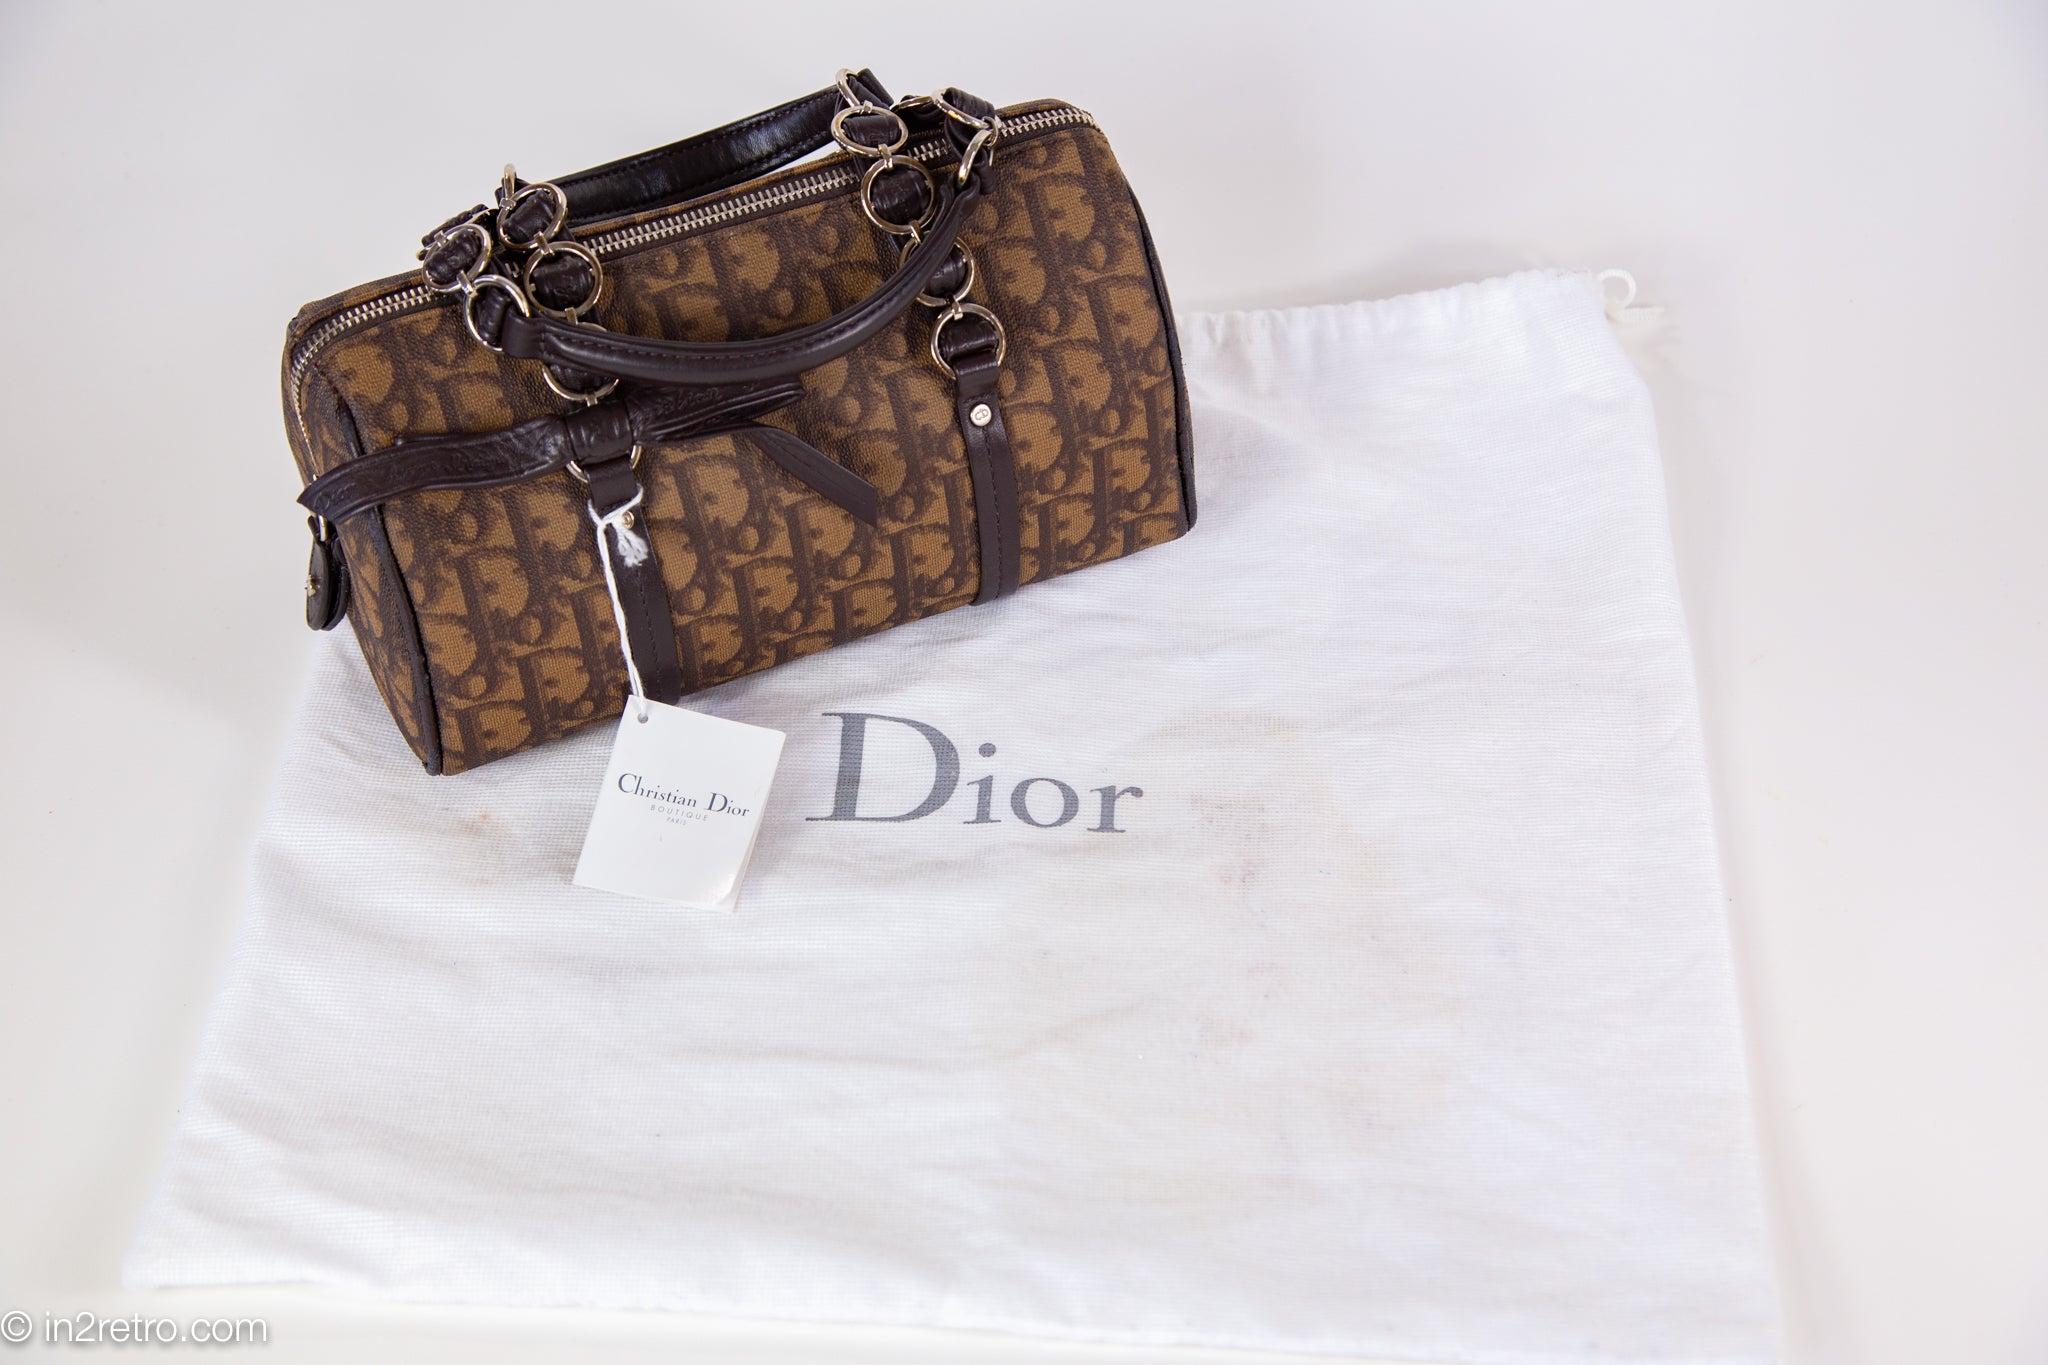 Authentic Christian Dior Vintage handbag